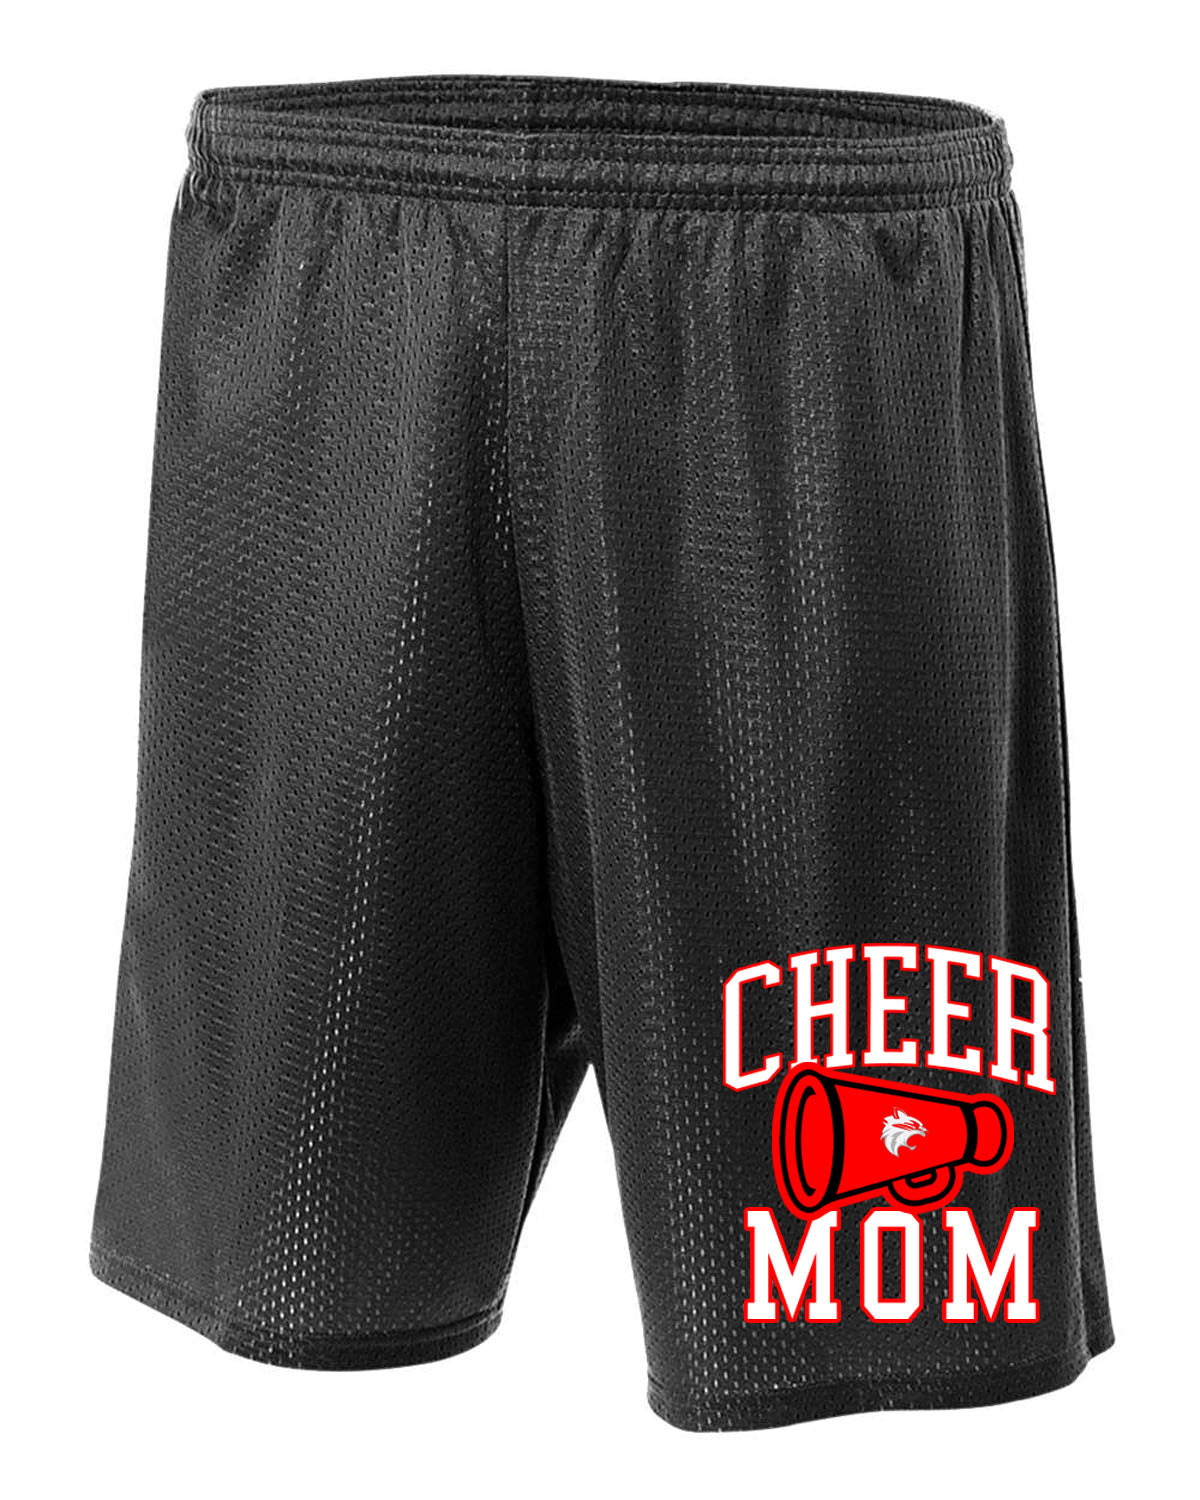 High Point Cheer Design 7 Shorts